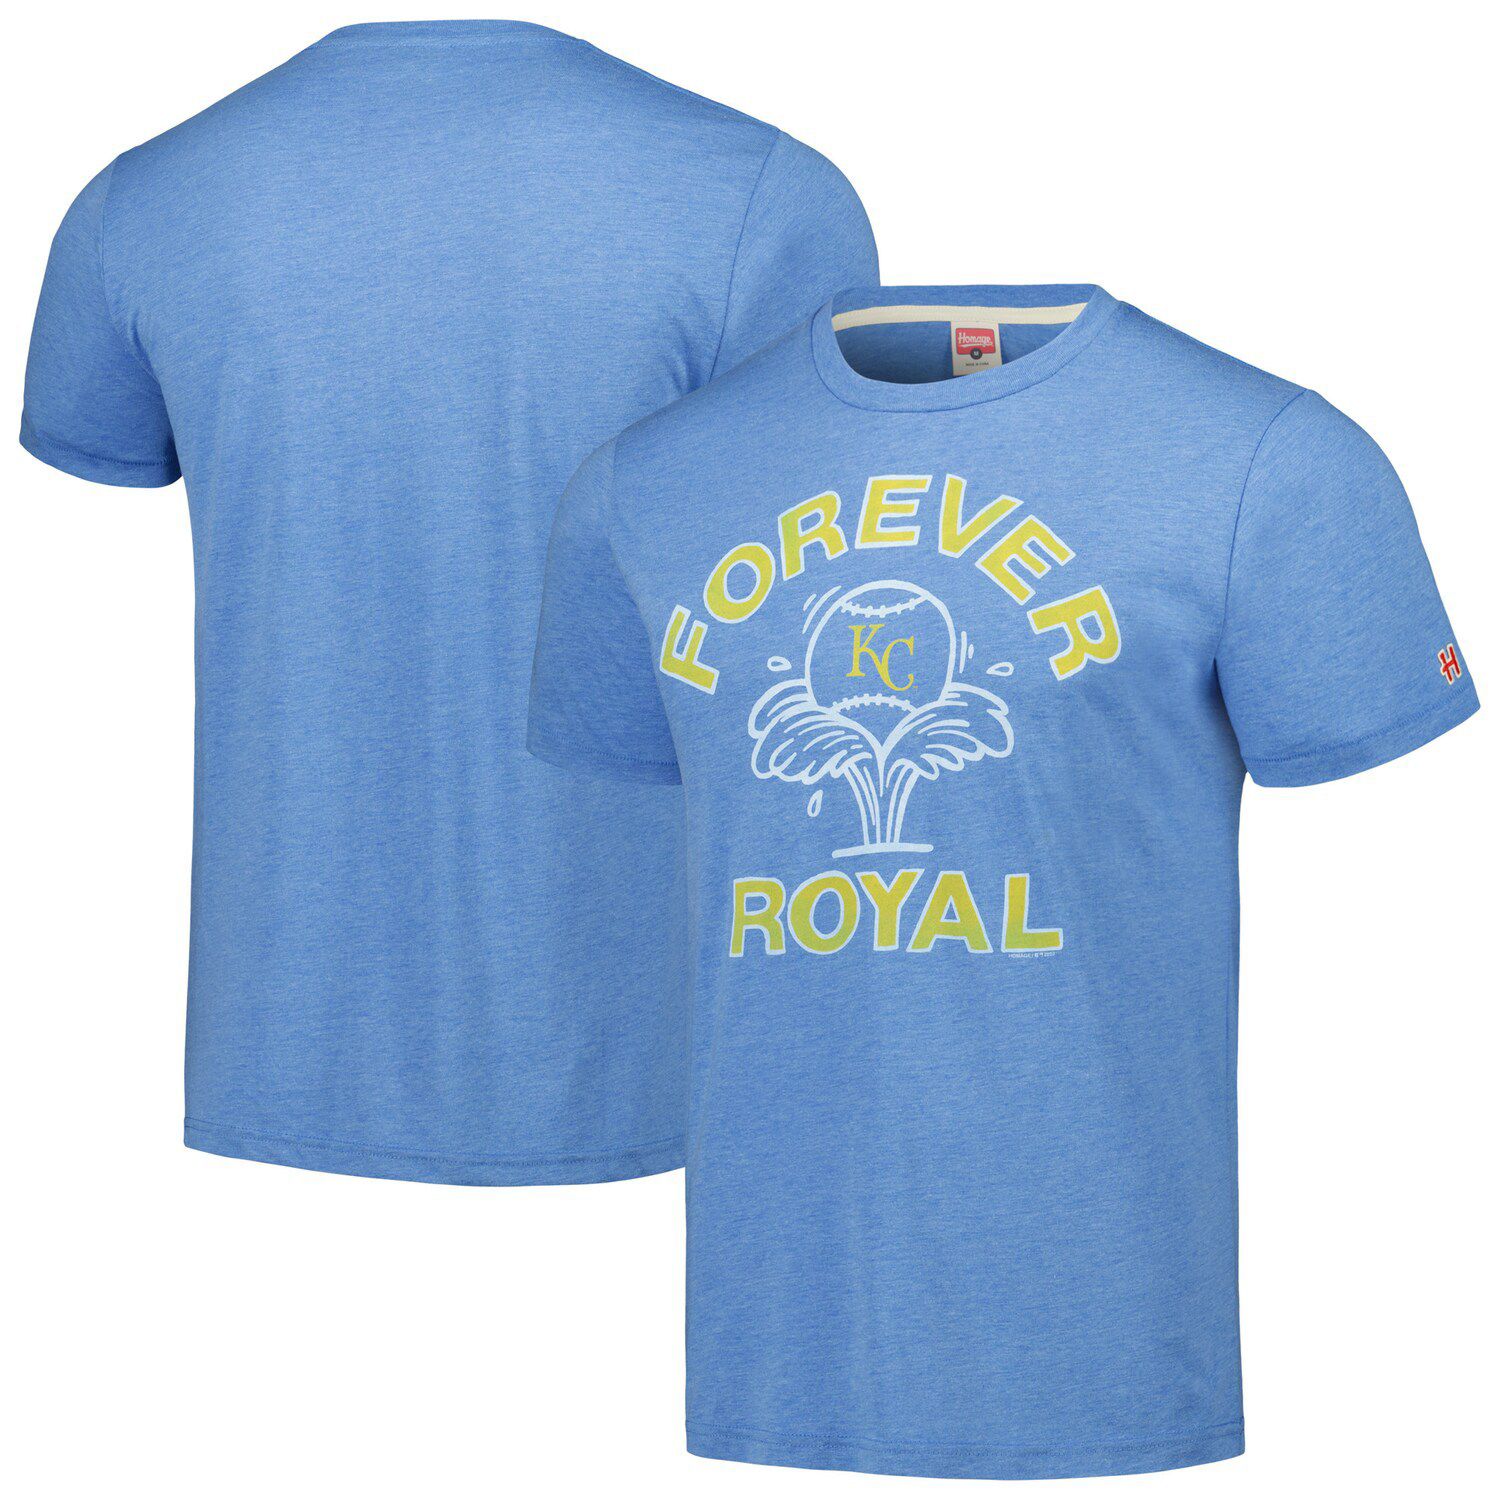 Women's New Era Light Blue Kansas City Royals 2-Hit Front Twist Burnout T-Shirt